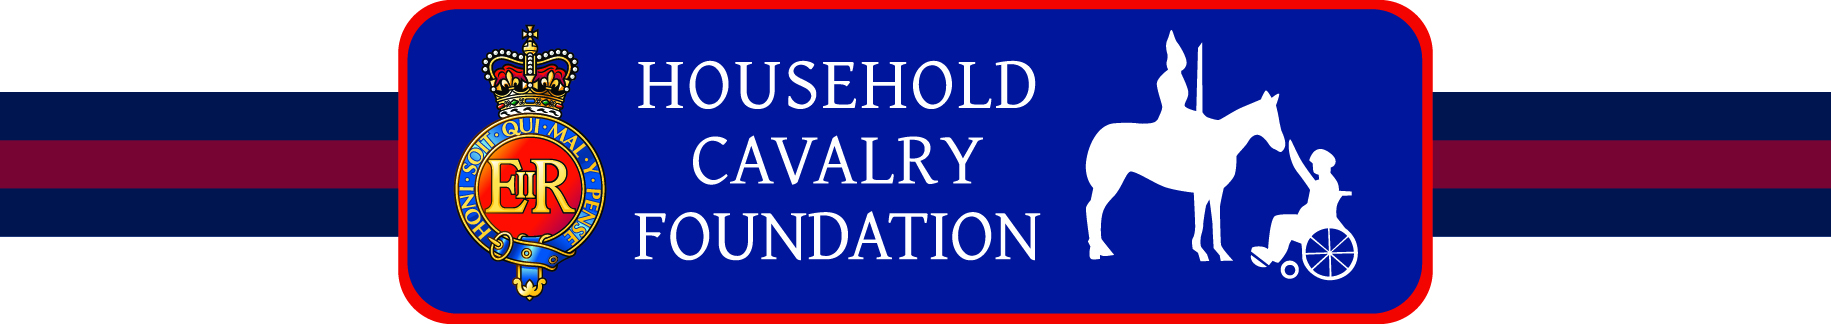 Household Cavalry Foundation Logo